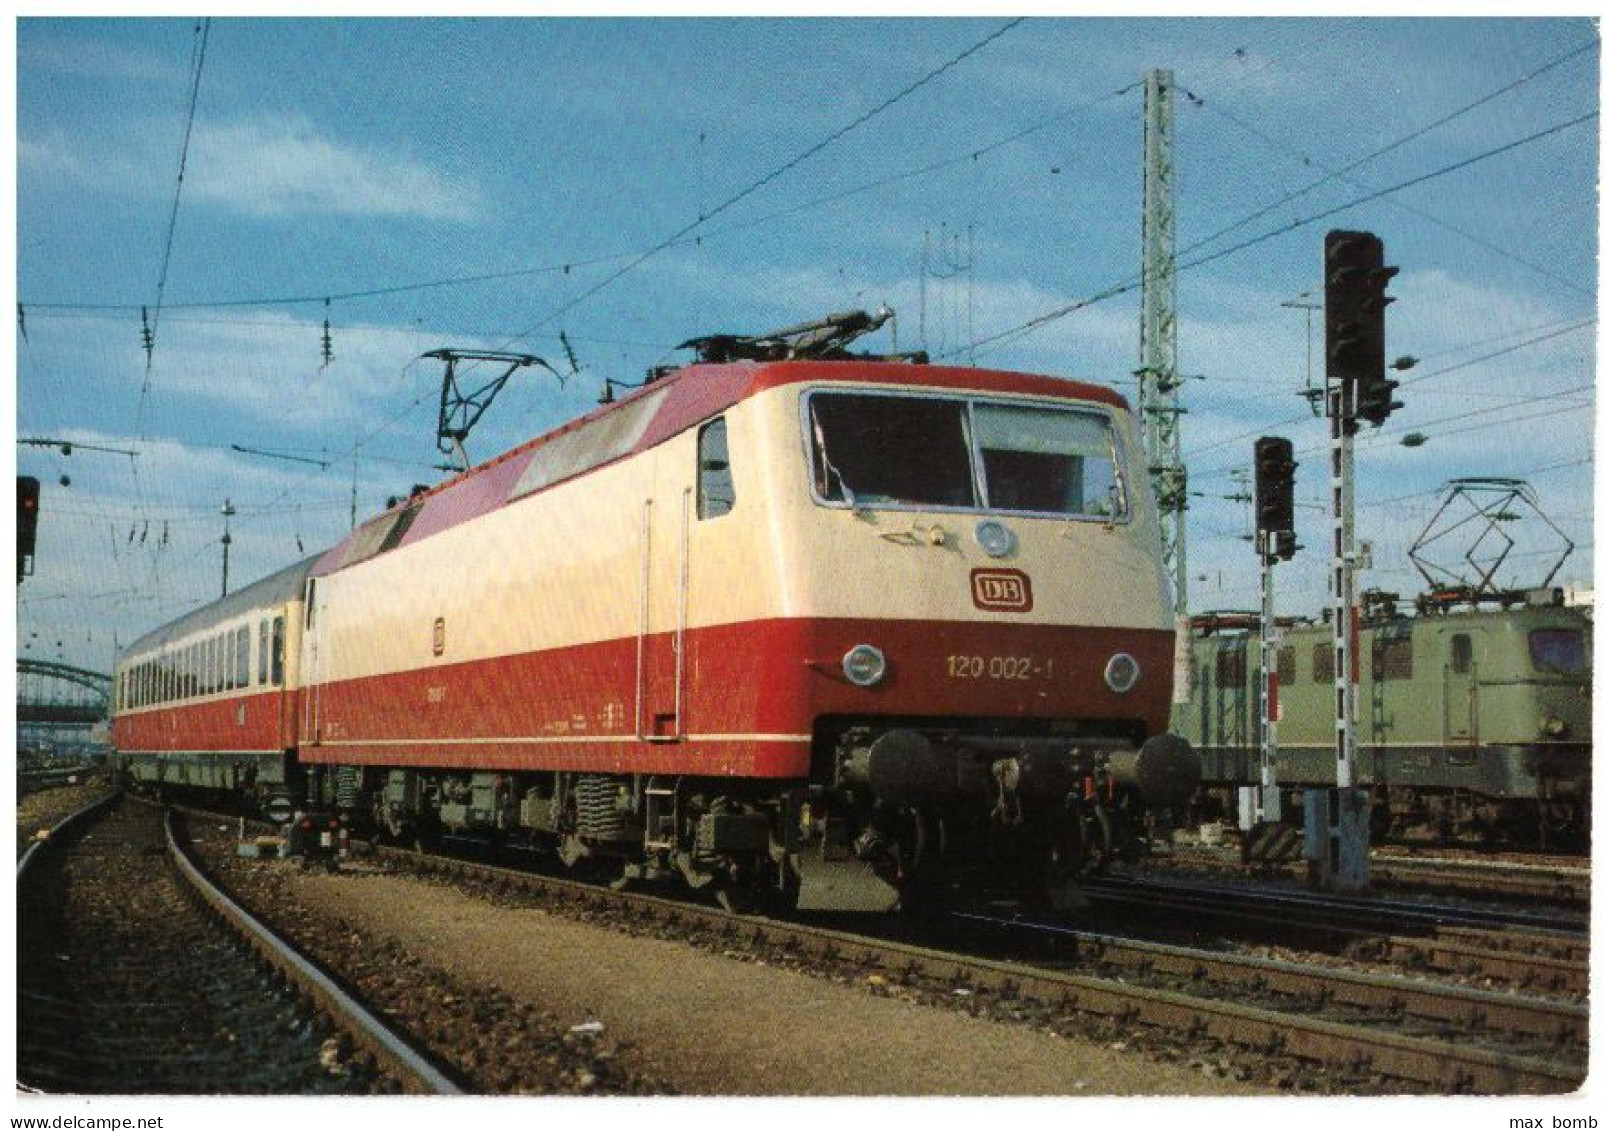 1981 TRENO GERMANIA DB ELEKTRISCHE UNIVERSALLOKOMOTIVE 120 002.1 LOCOMOTORE 106 - Trenes